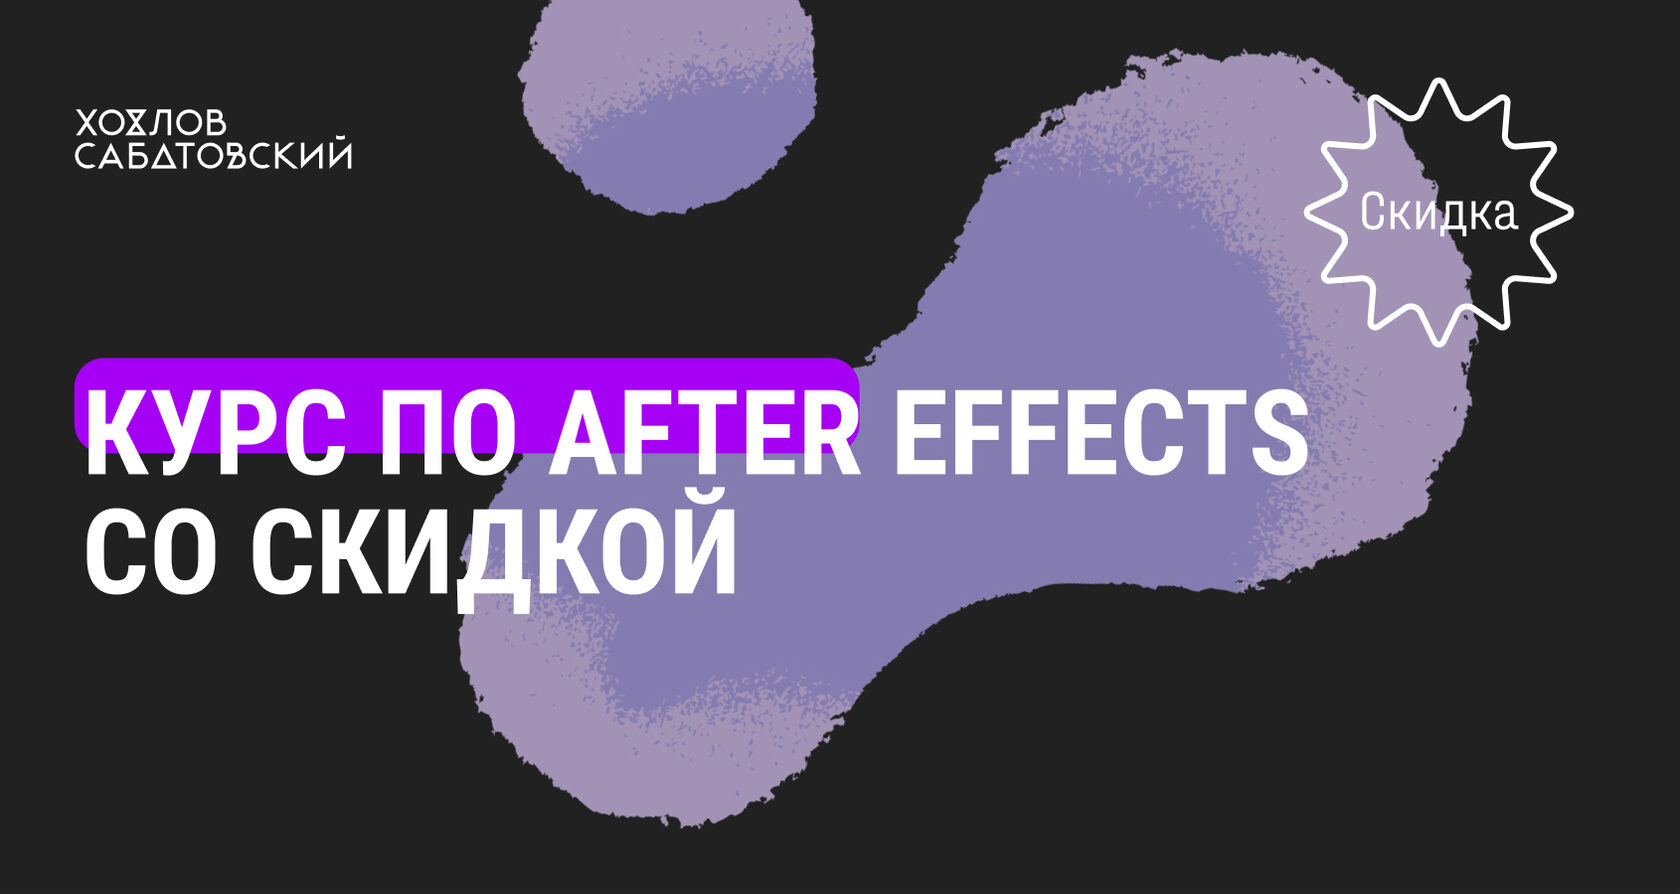 Adobe After Effects с нуля до специалиста (Курсы Хохлова Сабатовского)